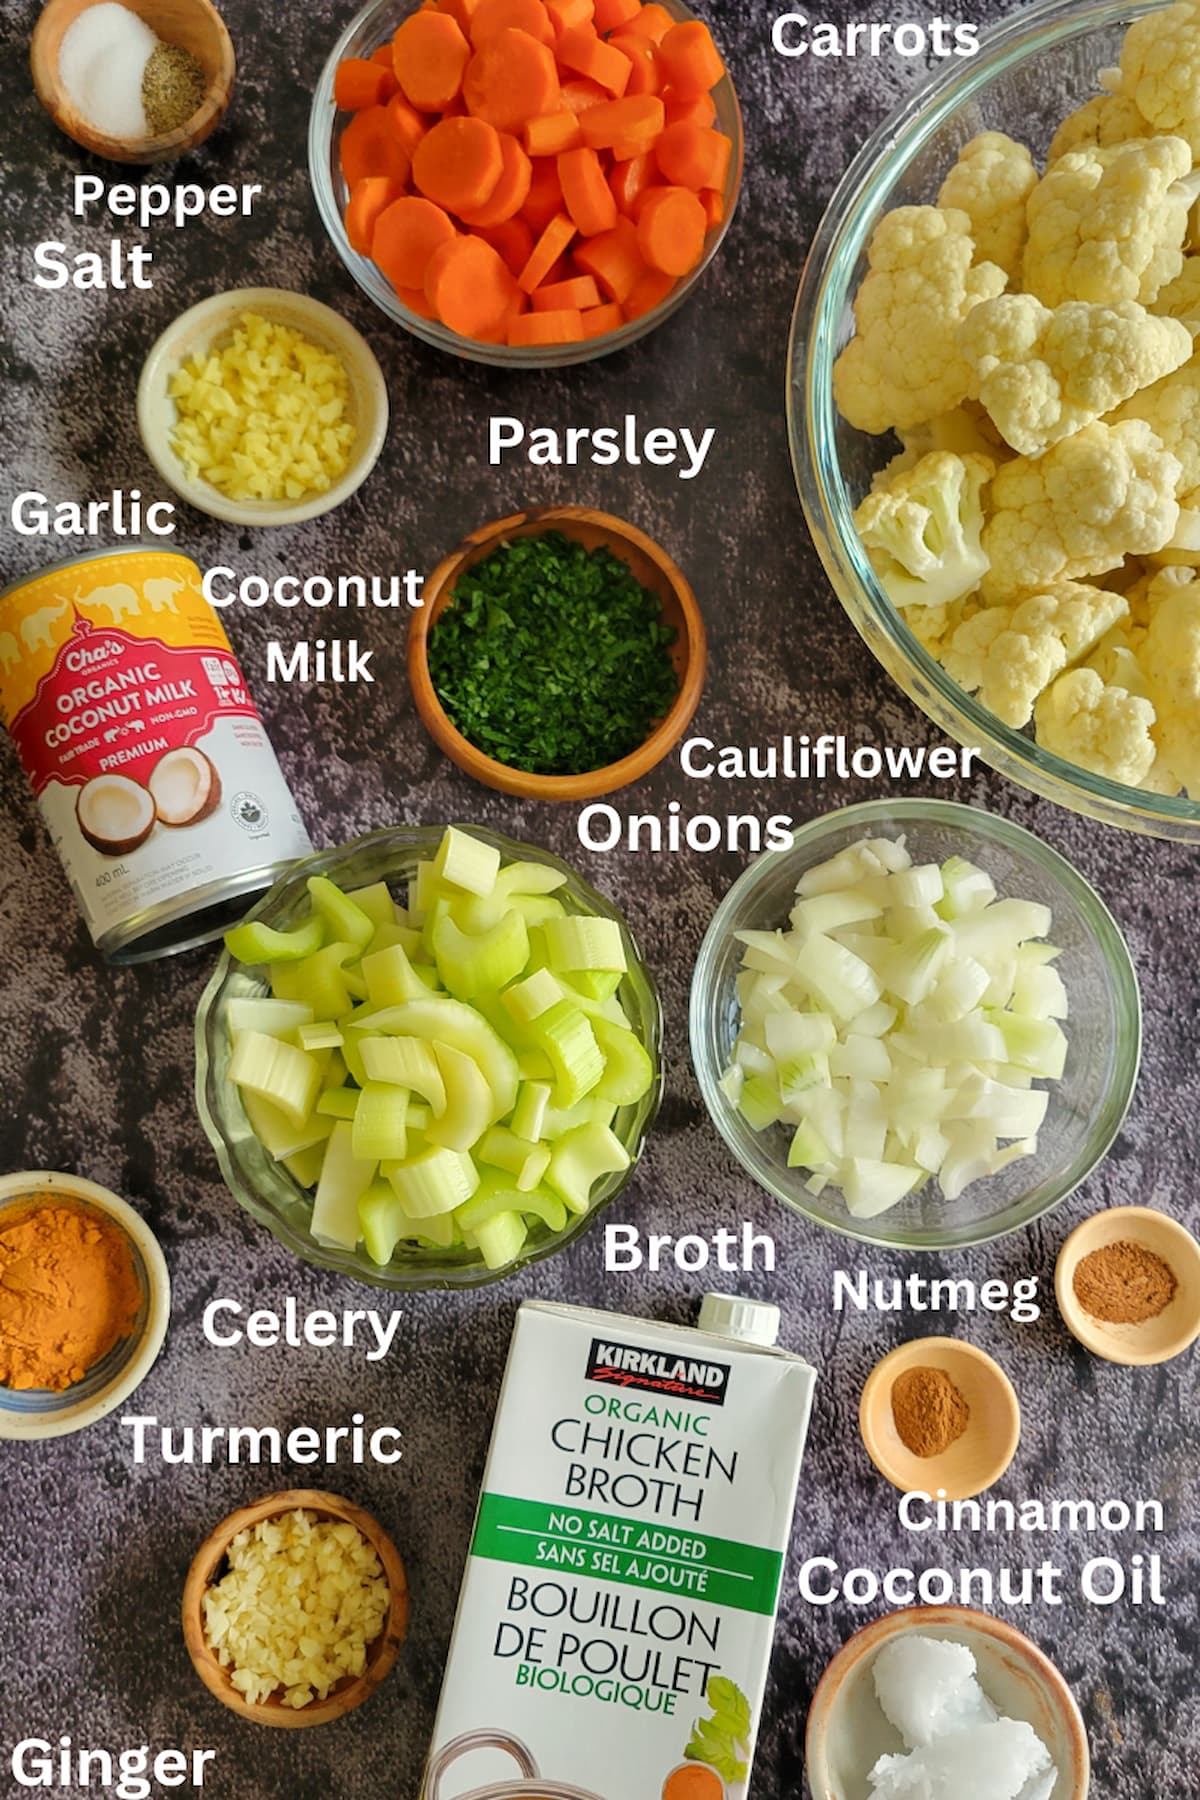 ingredients for soup with cauliflower - cauliflower, carrots, onions, celery, garlic, ginger, salt, pepper, coconut milk, coconut oil, chicken broth, cinnamon, nutmeg, turmeric, parsley